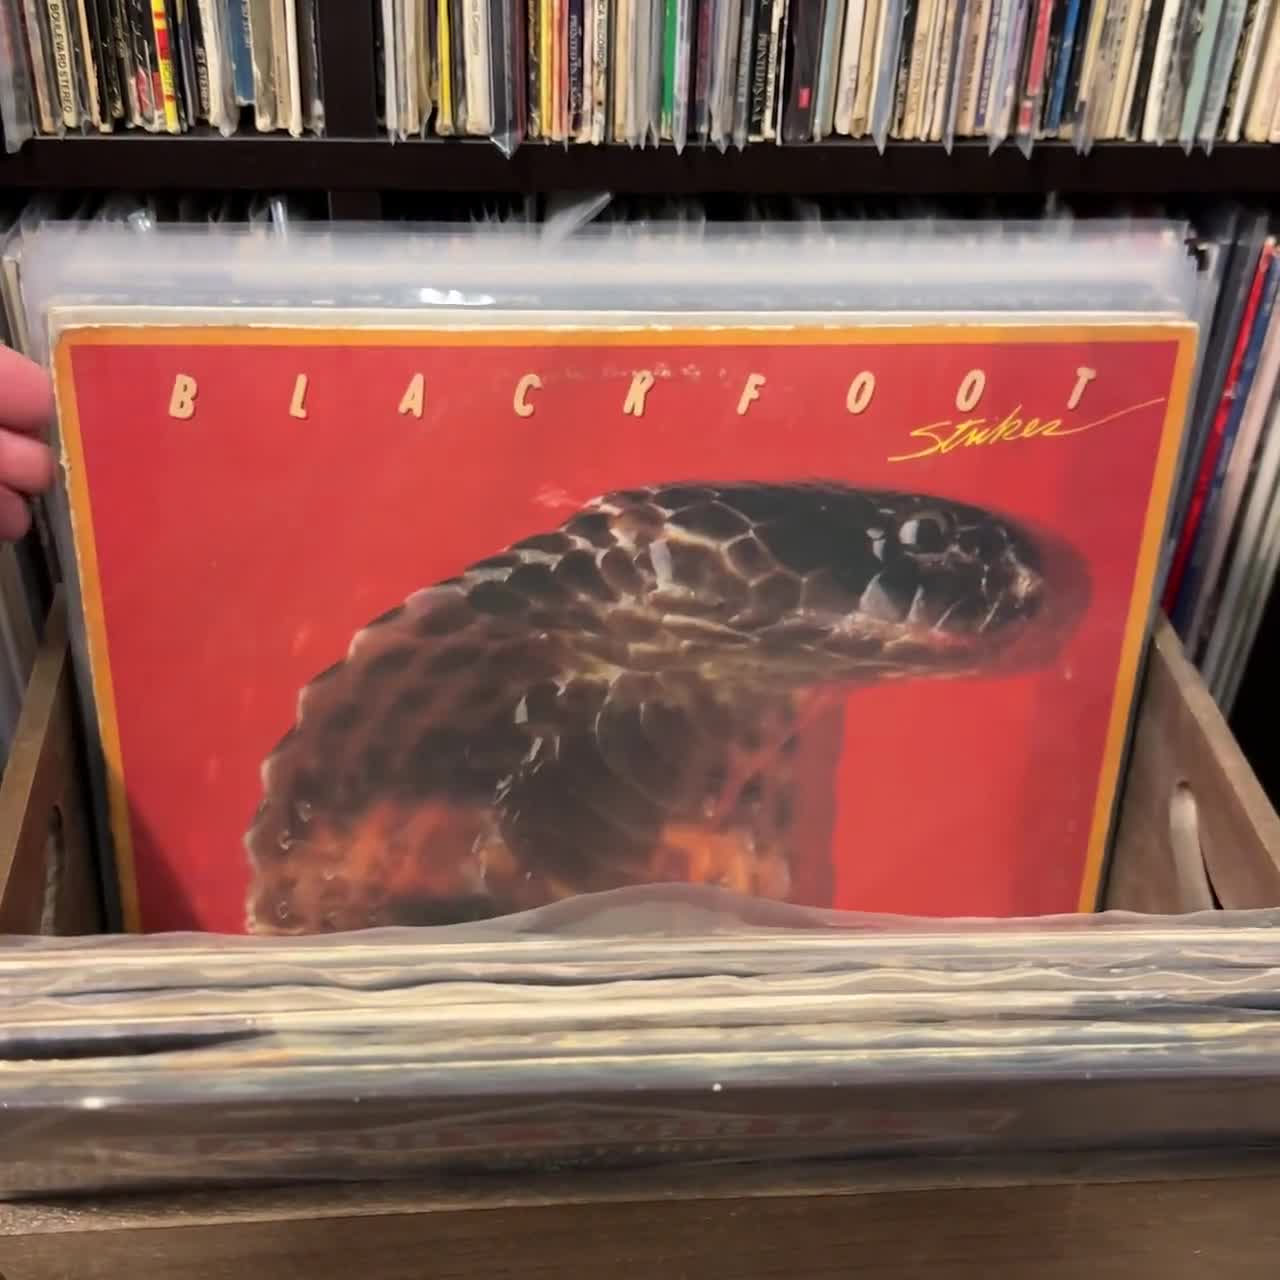 George Harrison cloud Nine Vinyl Record Album 1980s Classic Rock